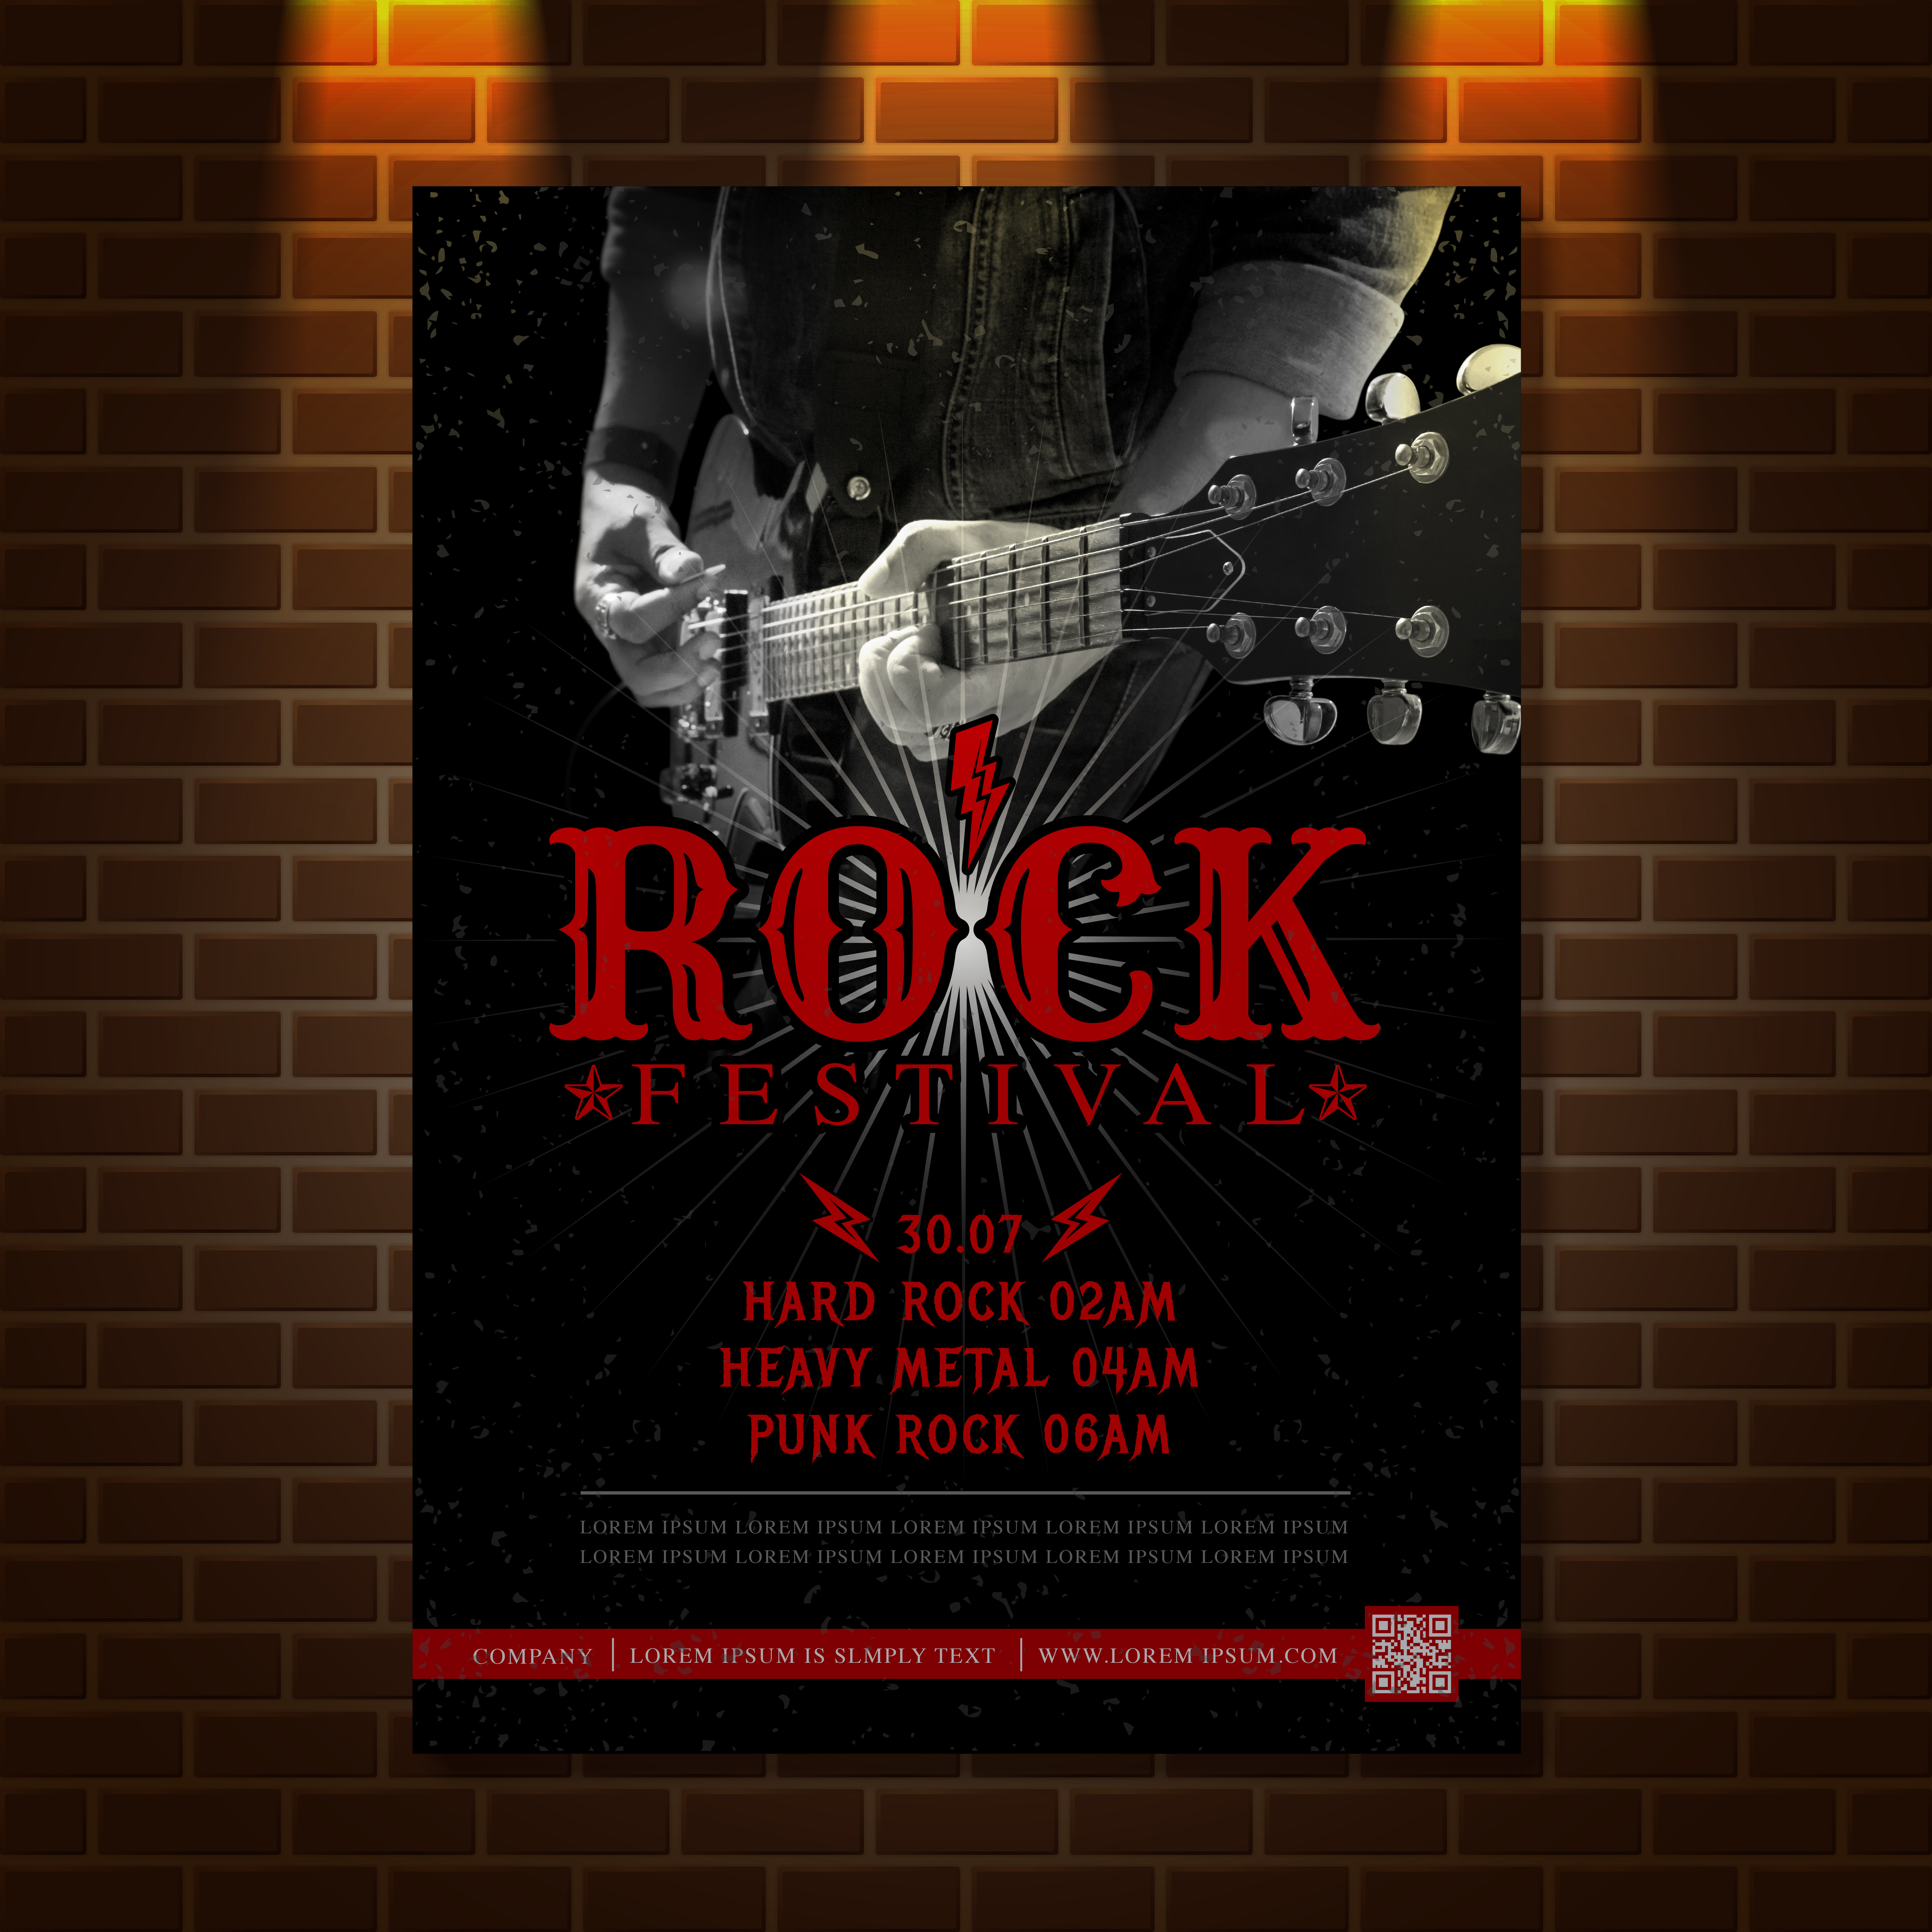 Guitar hero rock music festival poster design template vector ...